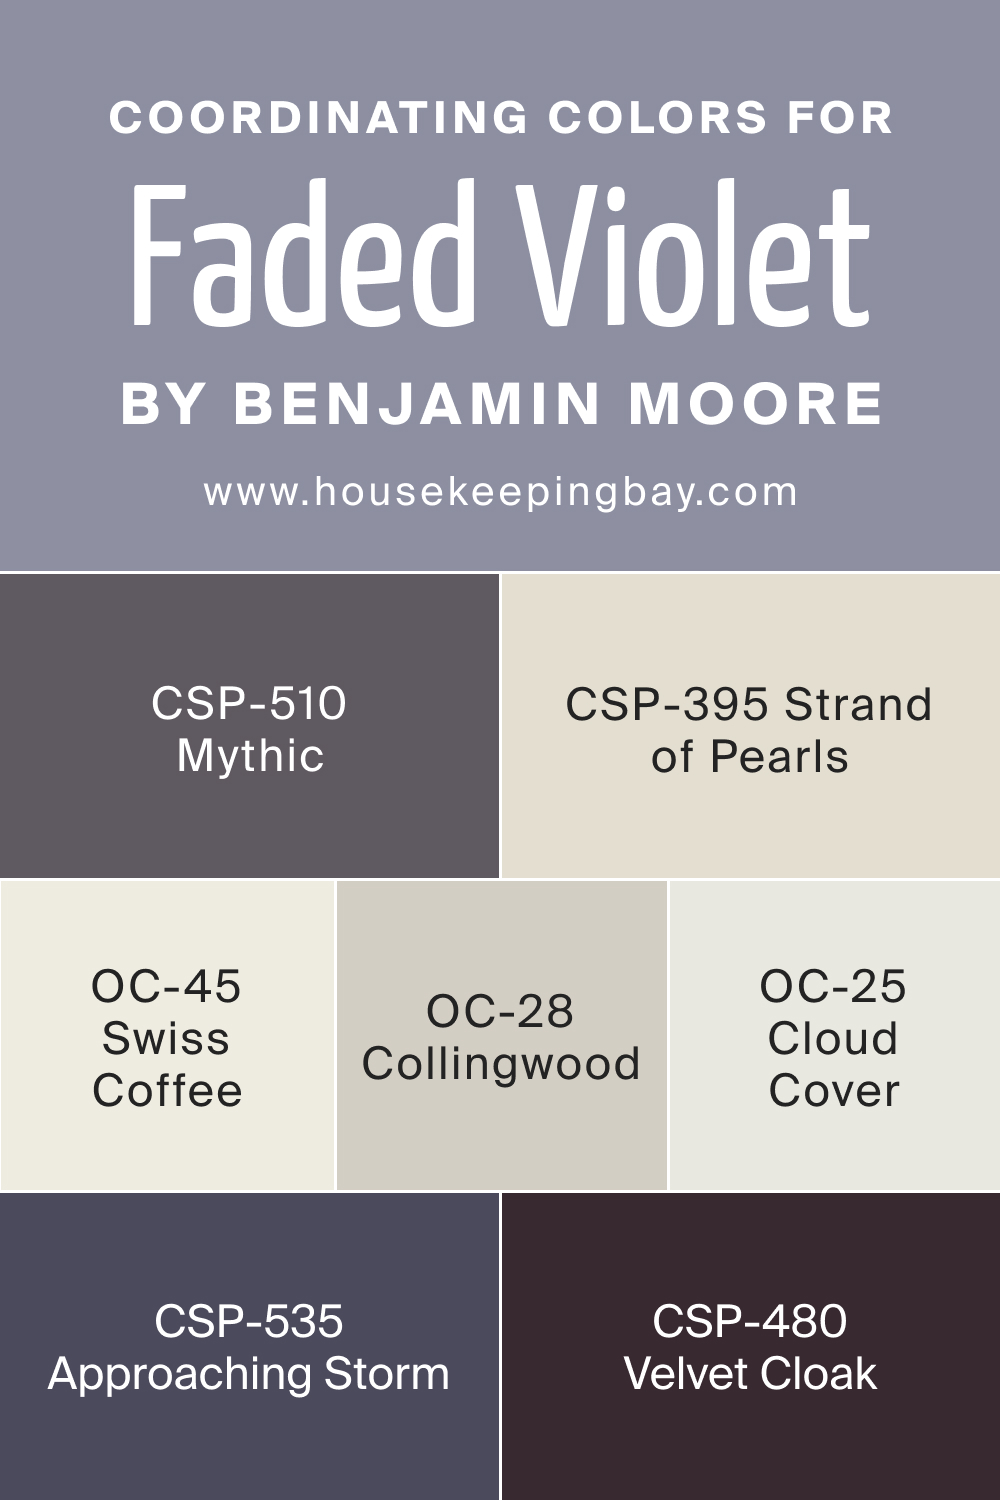 Coordinating Colors of BM Faded Violet CSP-455